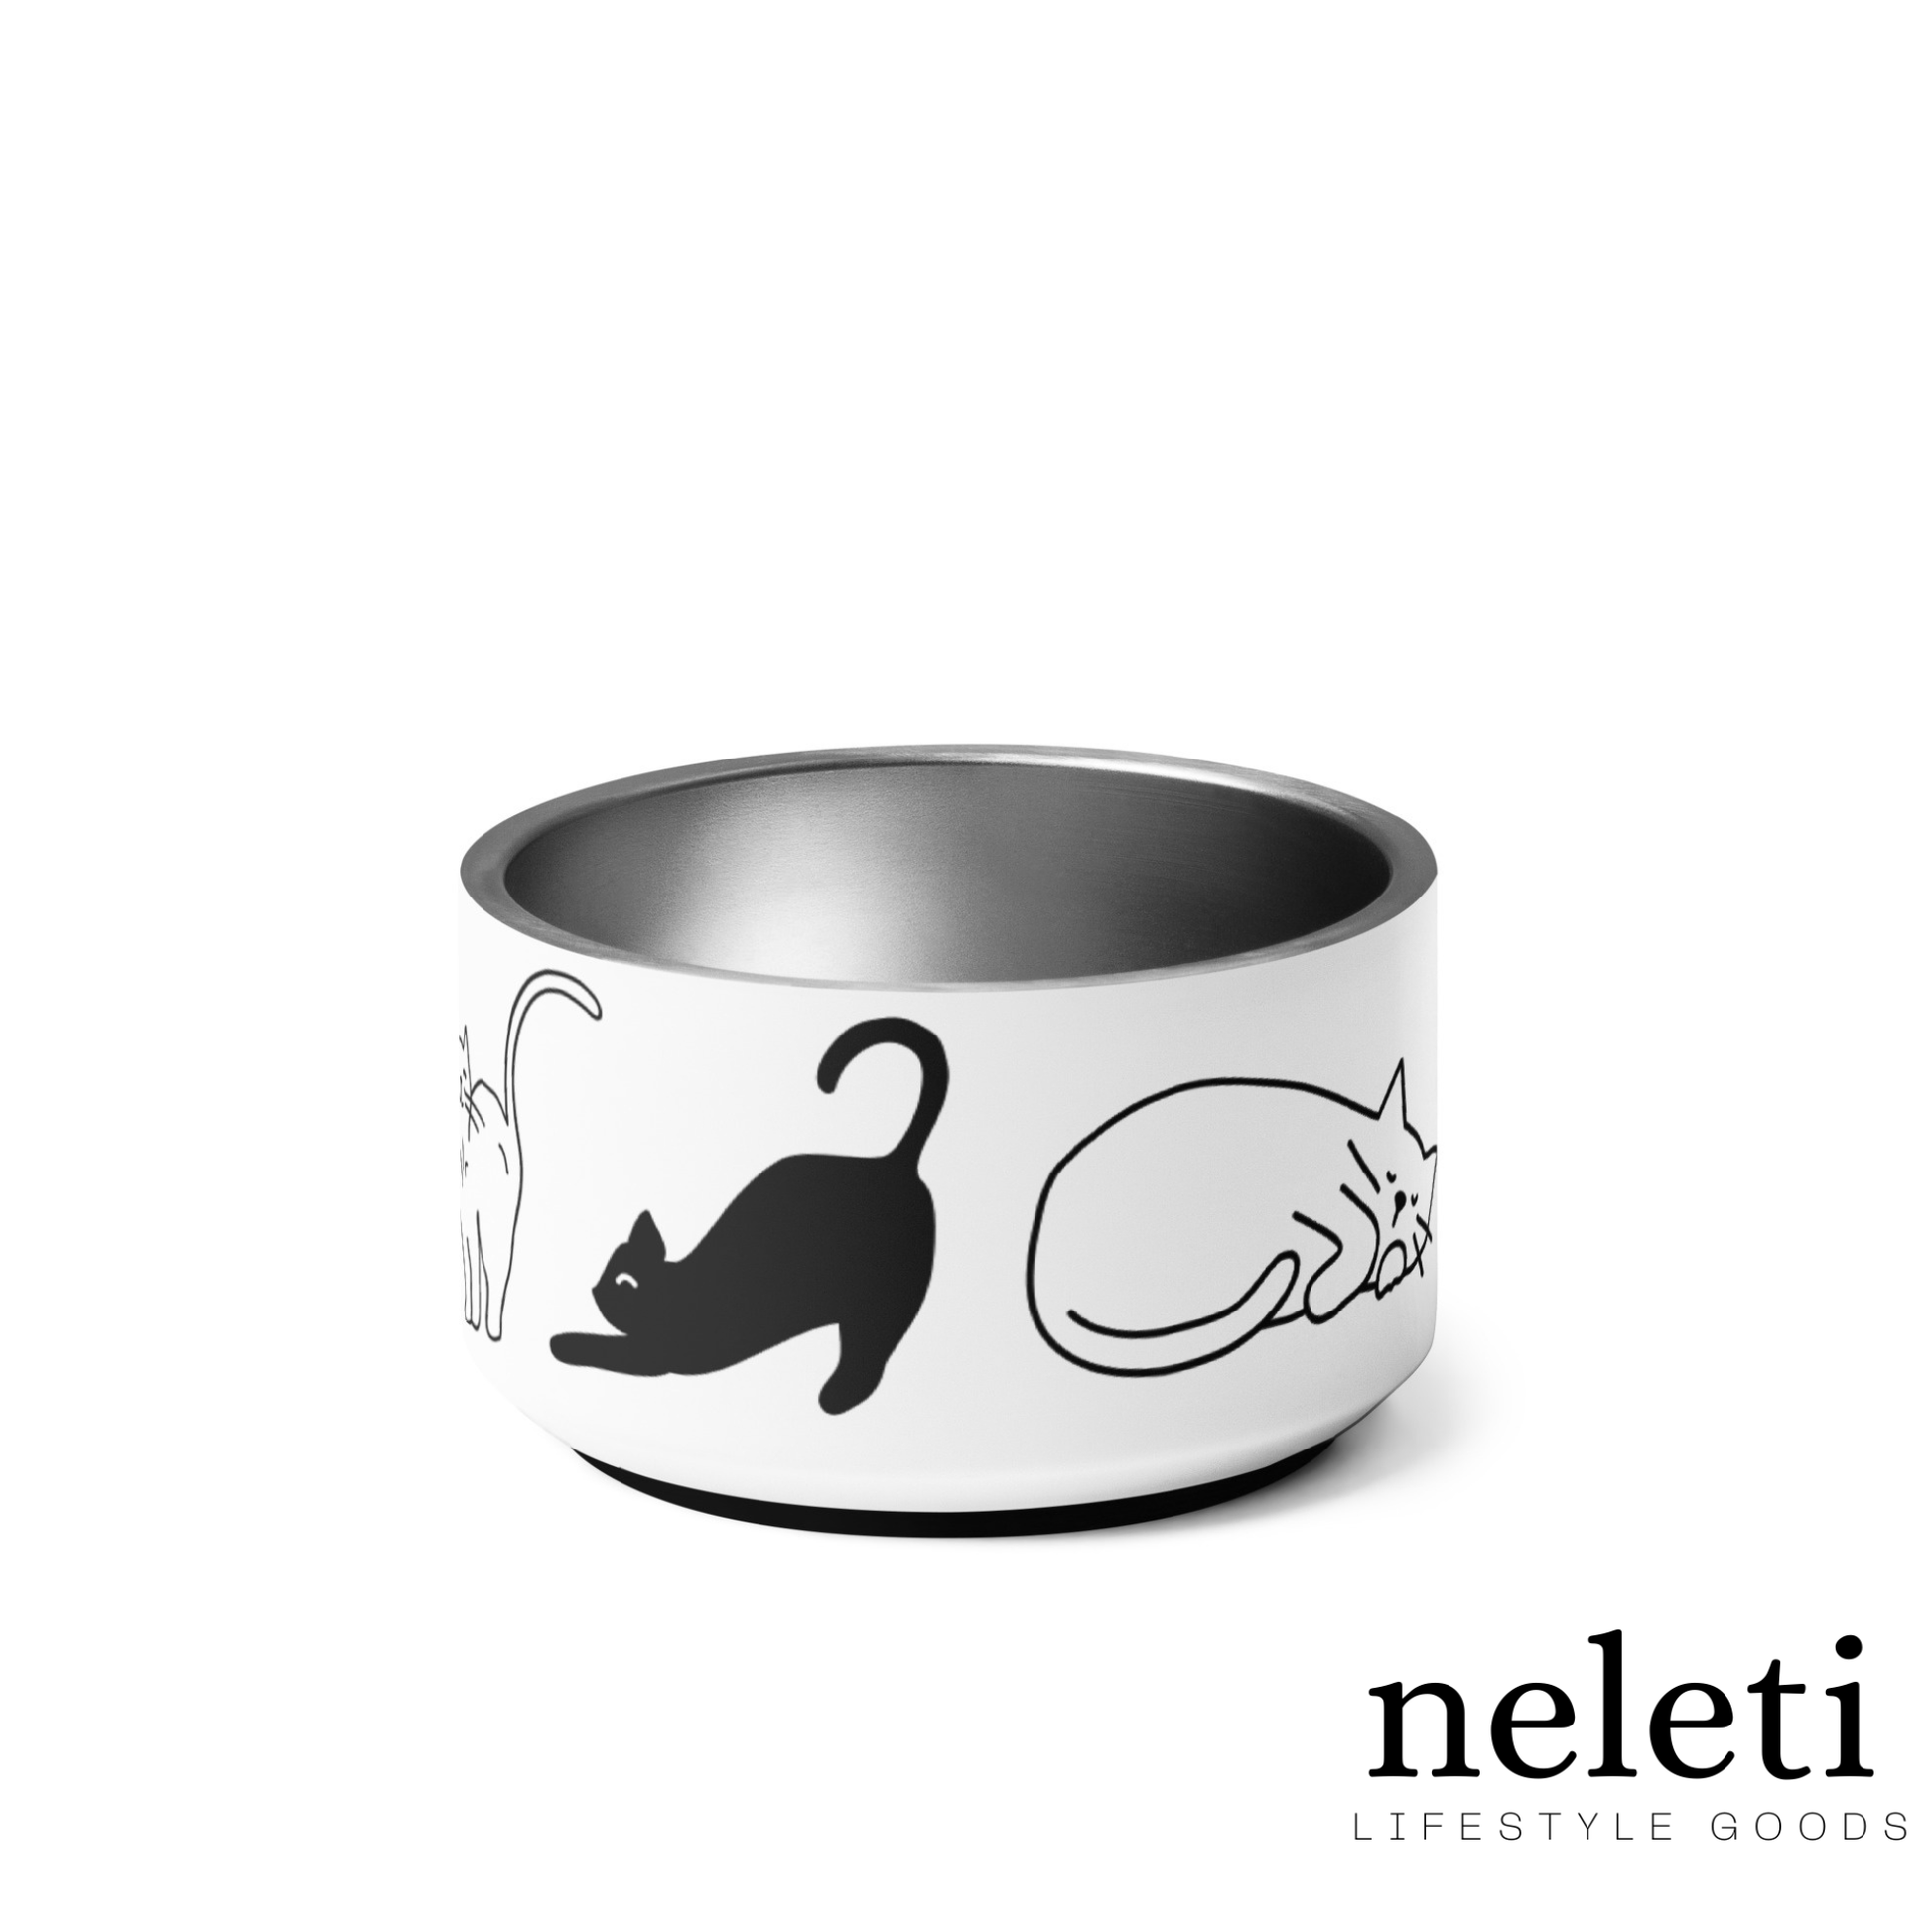 neleti.com-white-insulated-cat-bowl-with-cats-print